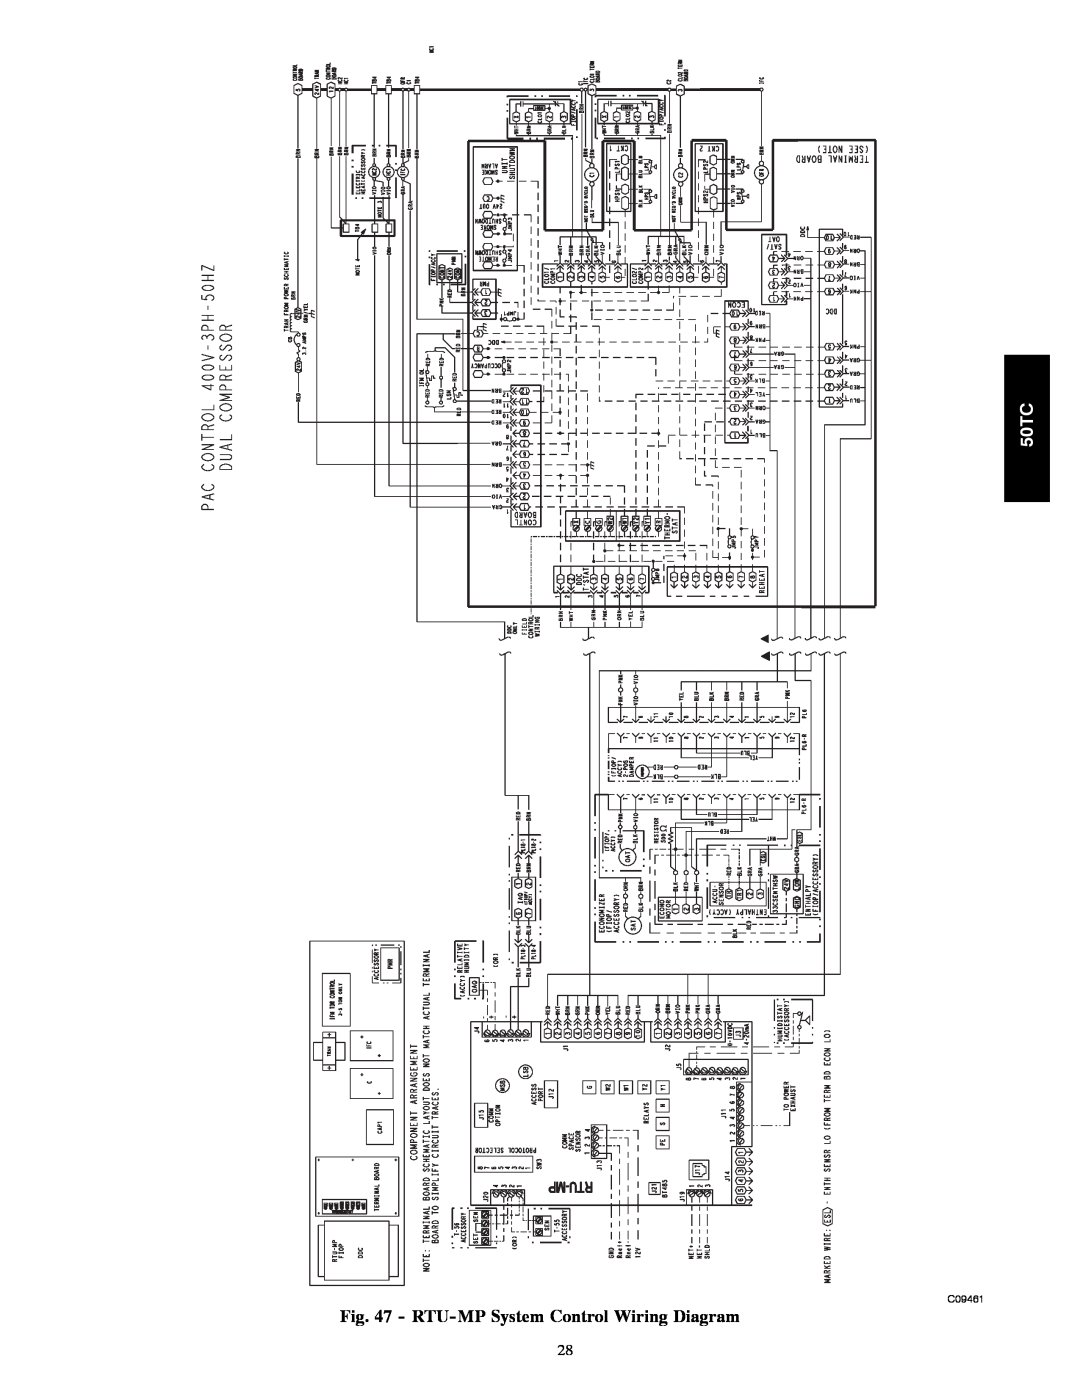 Carrier 50TC installation instructions RTU-MPSystem Control Wiring Diagram, C09461 